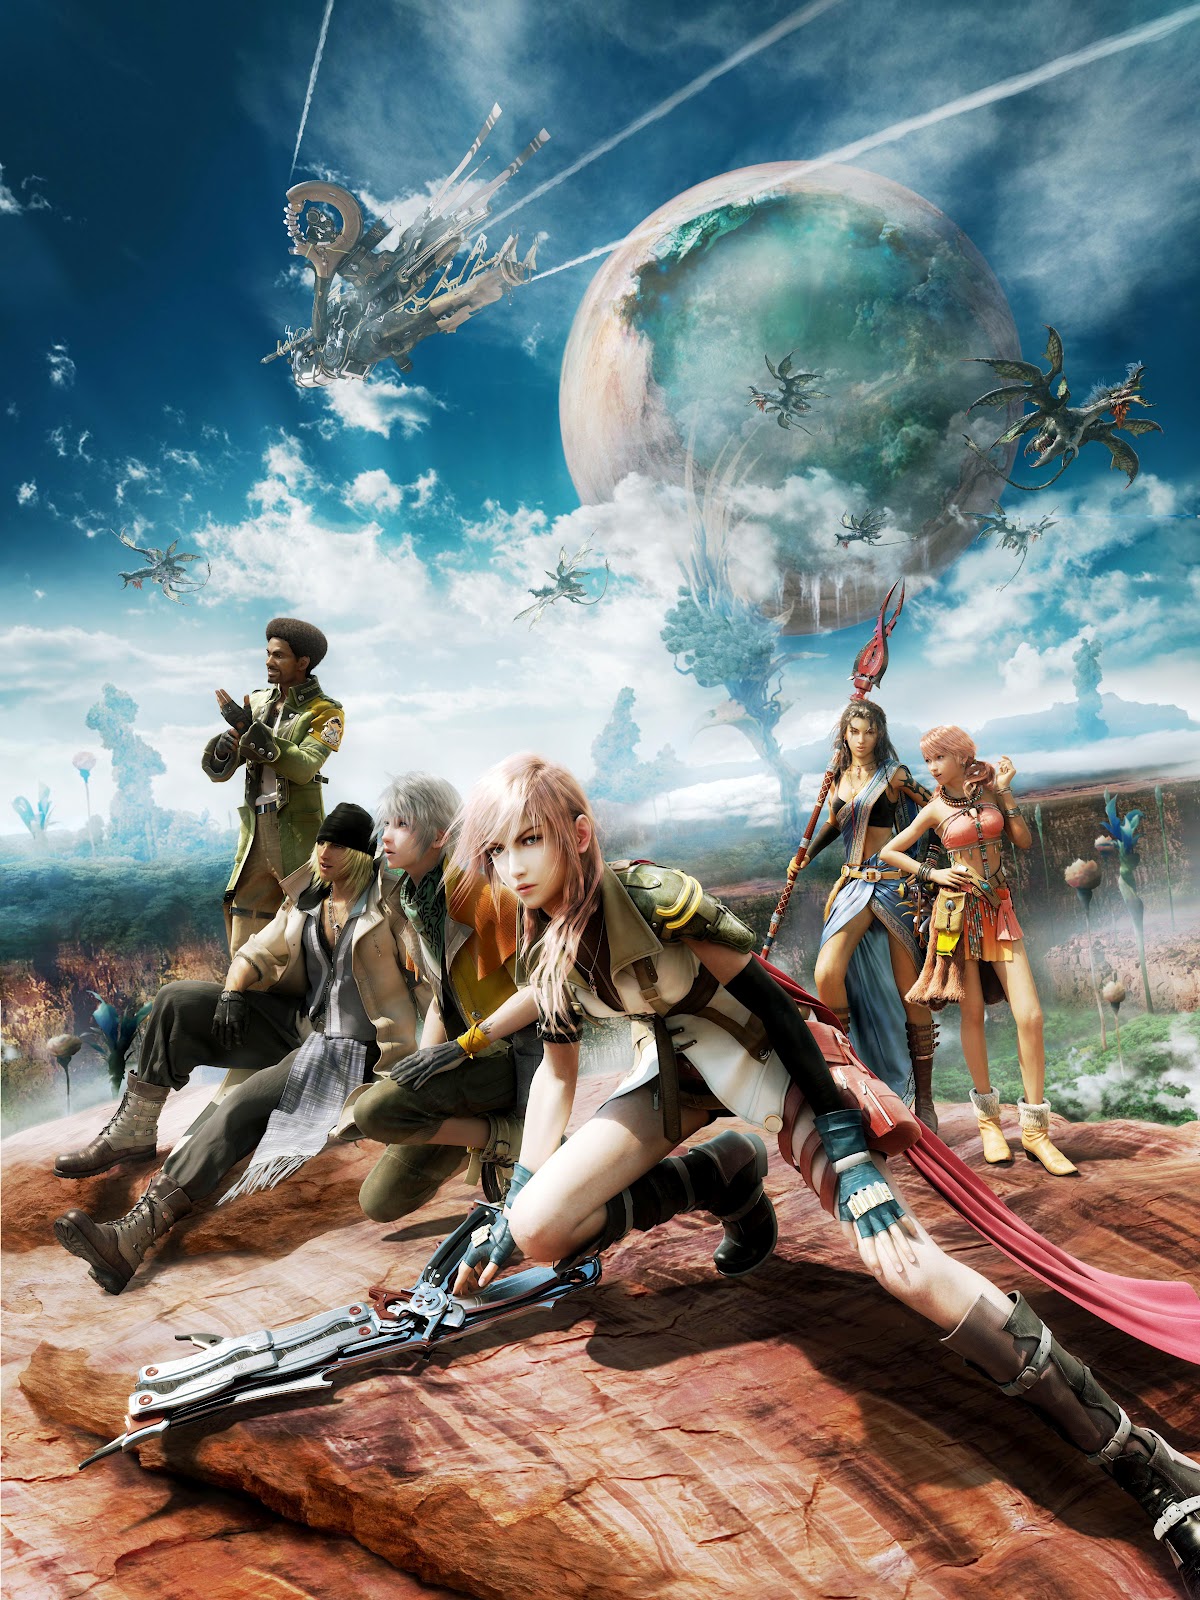 Fantasia Final Fantasy XIII Game Review